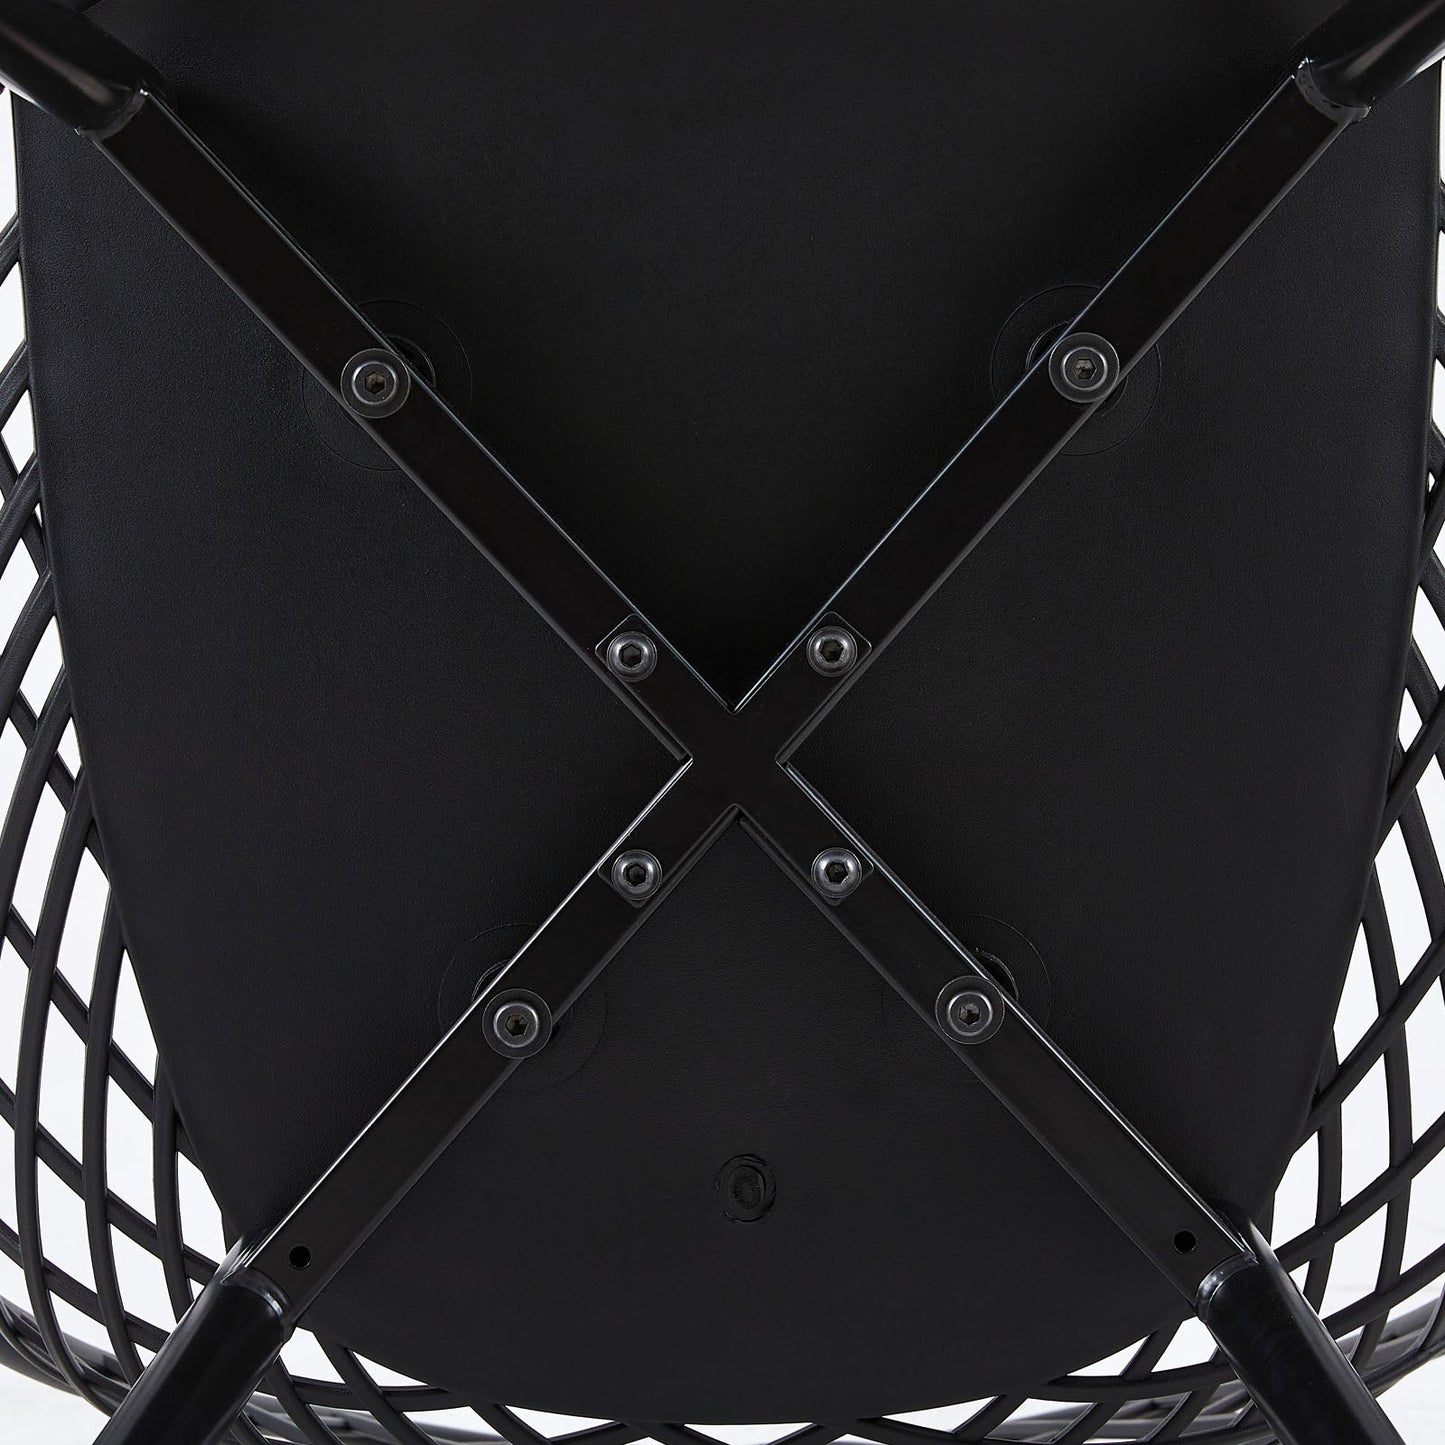 MILAN  Metal Side Chair (Set of 6) - Black/White/Gray